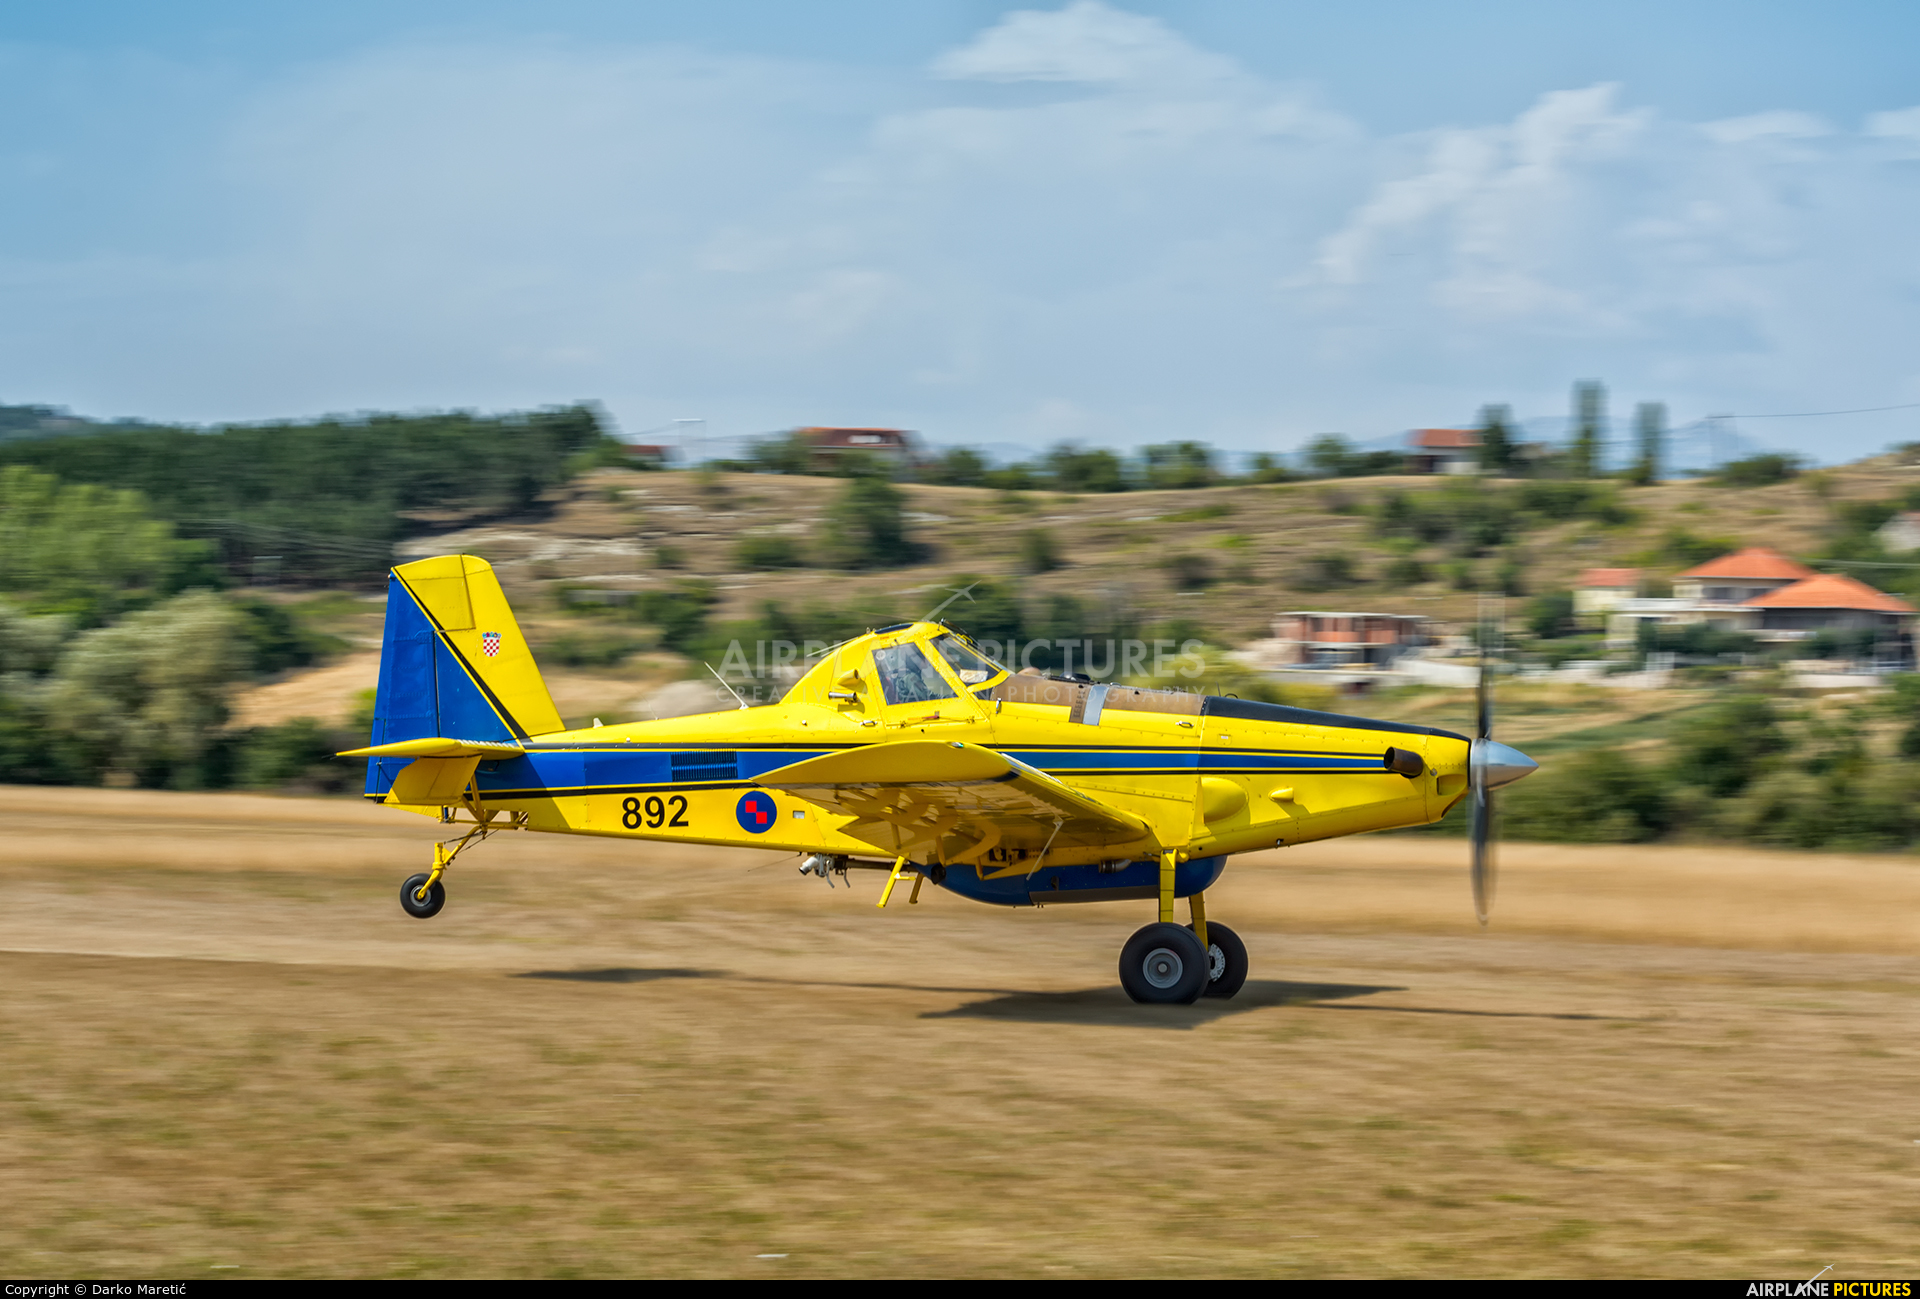 Croatia - Air Force 890 aircraft at Sinj Airfield